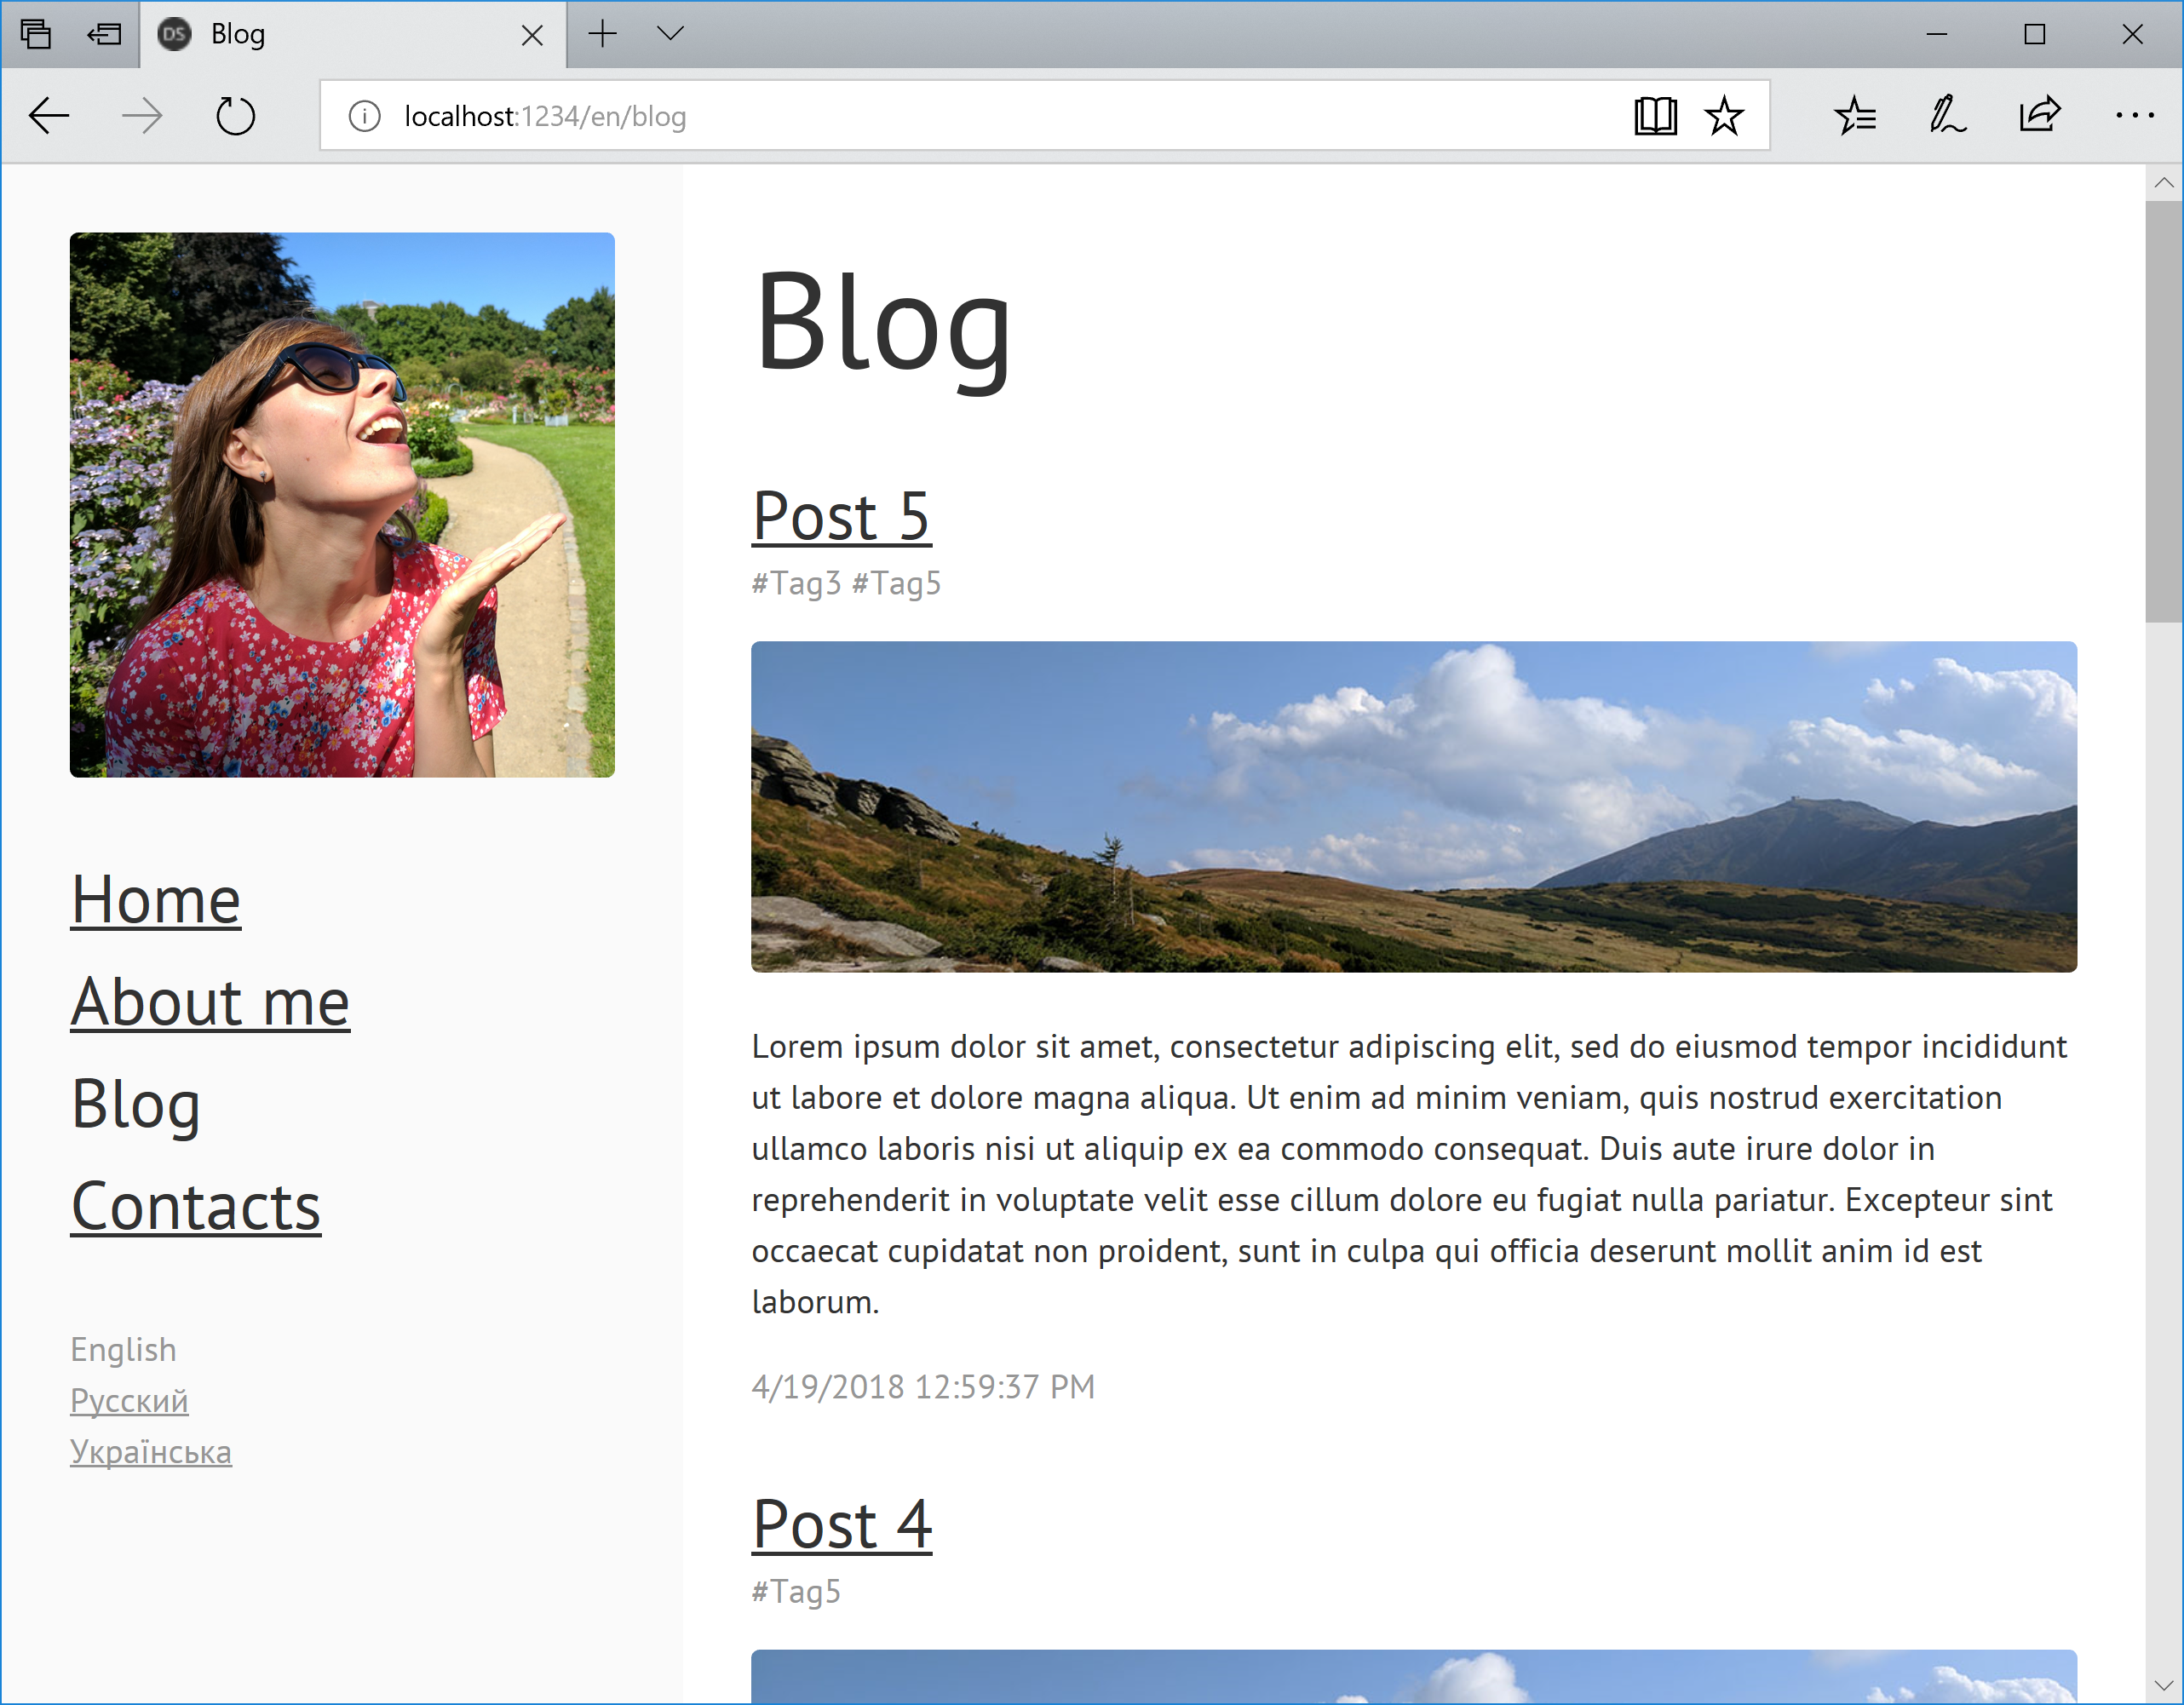 Blog page